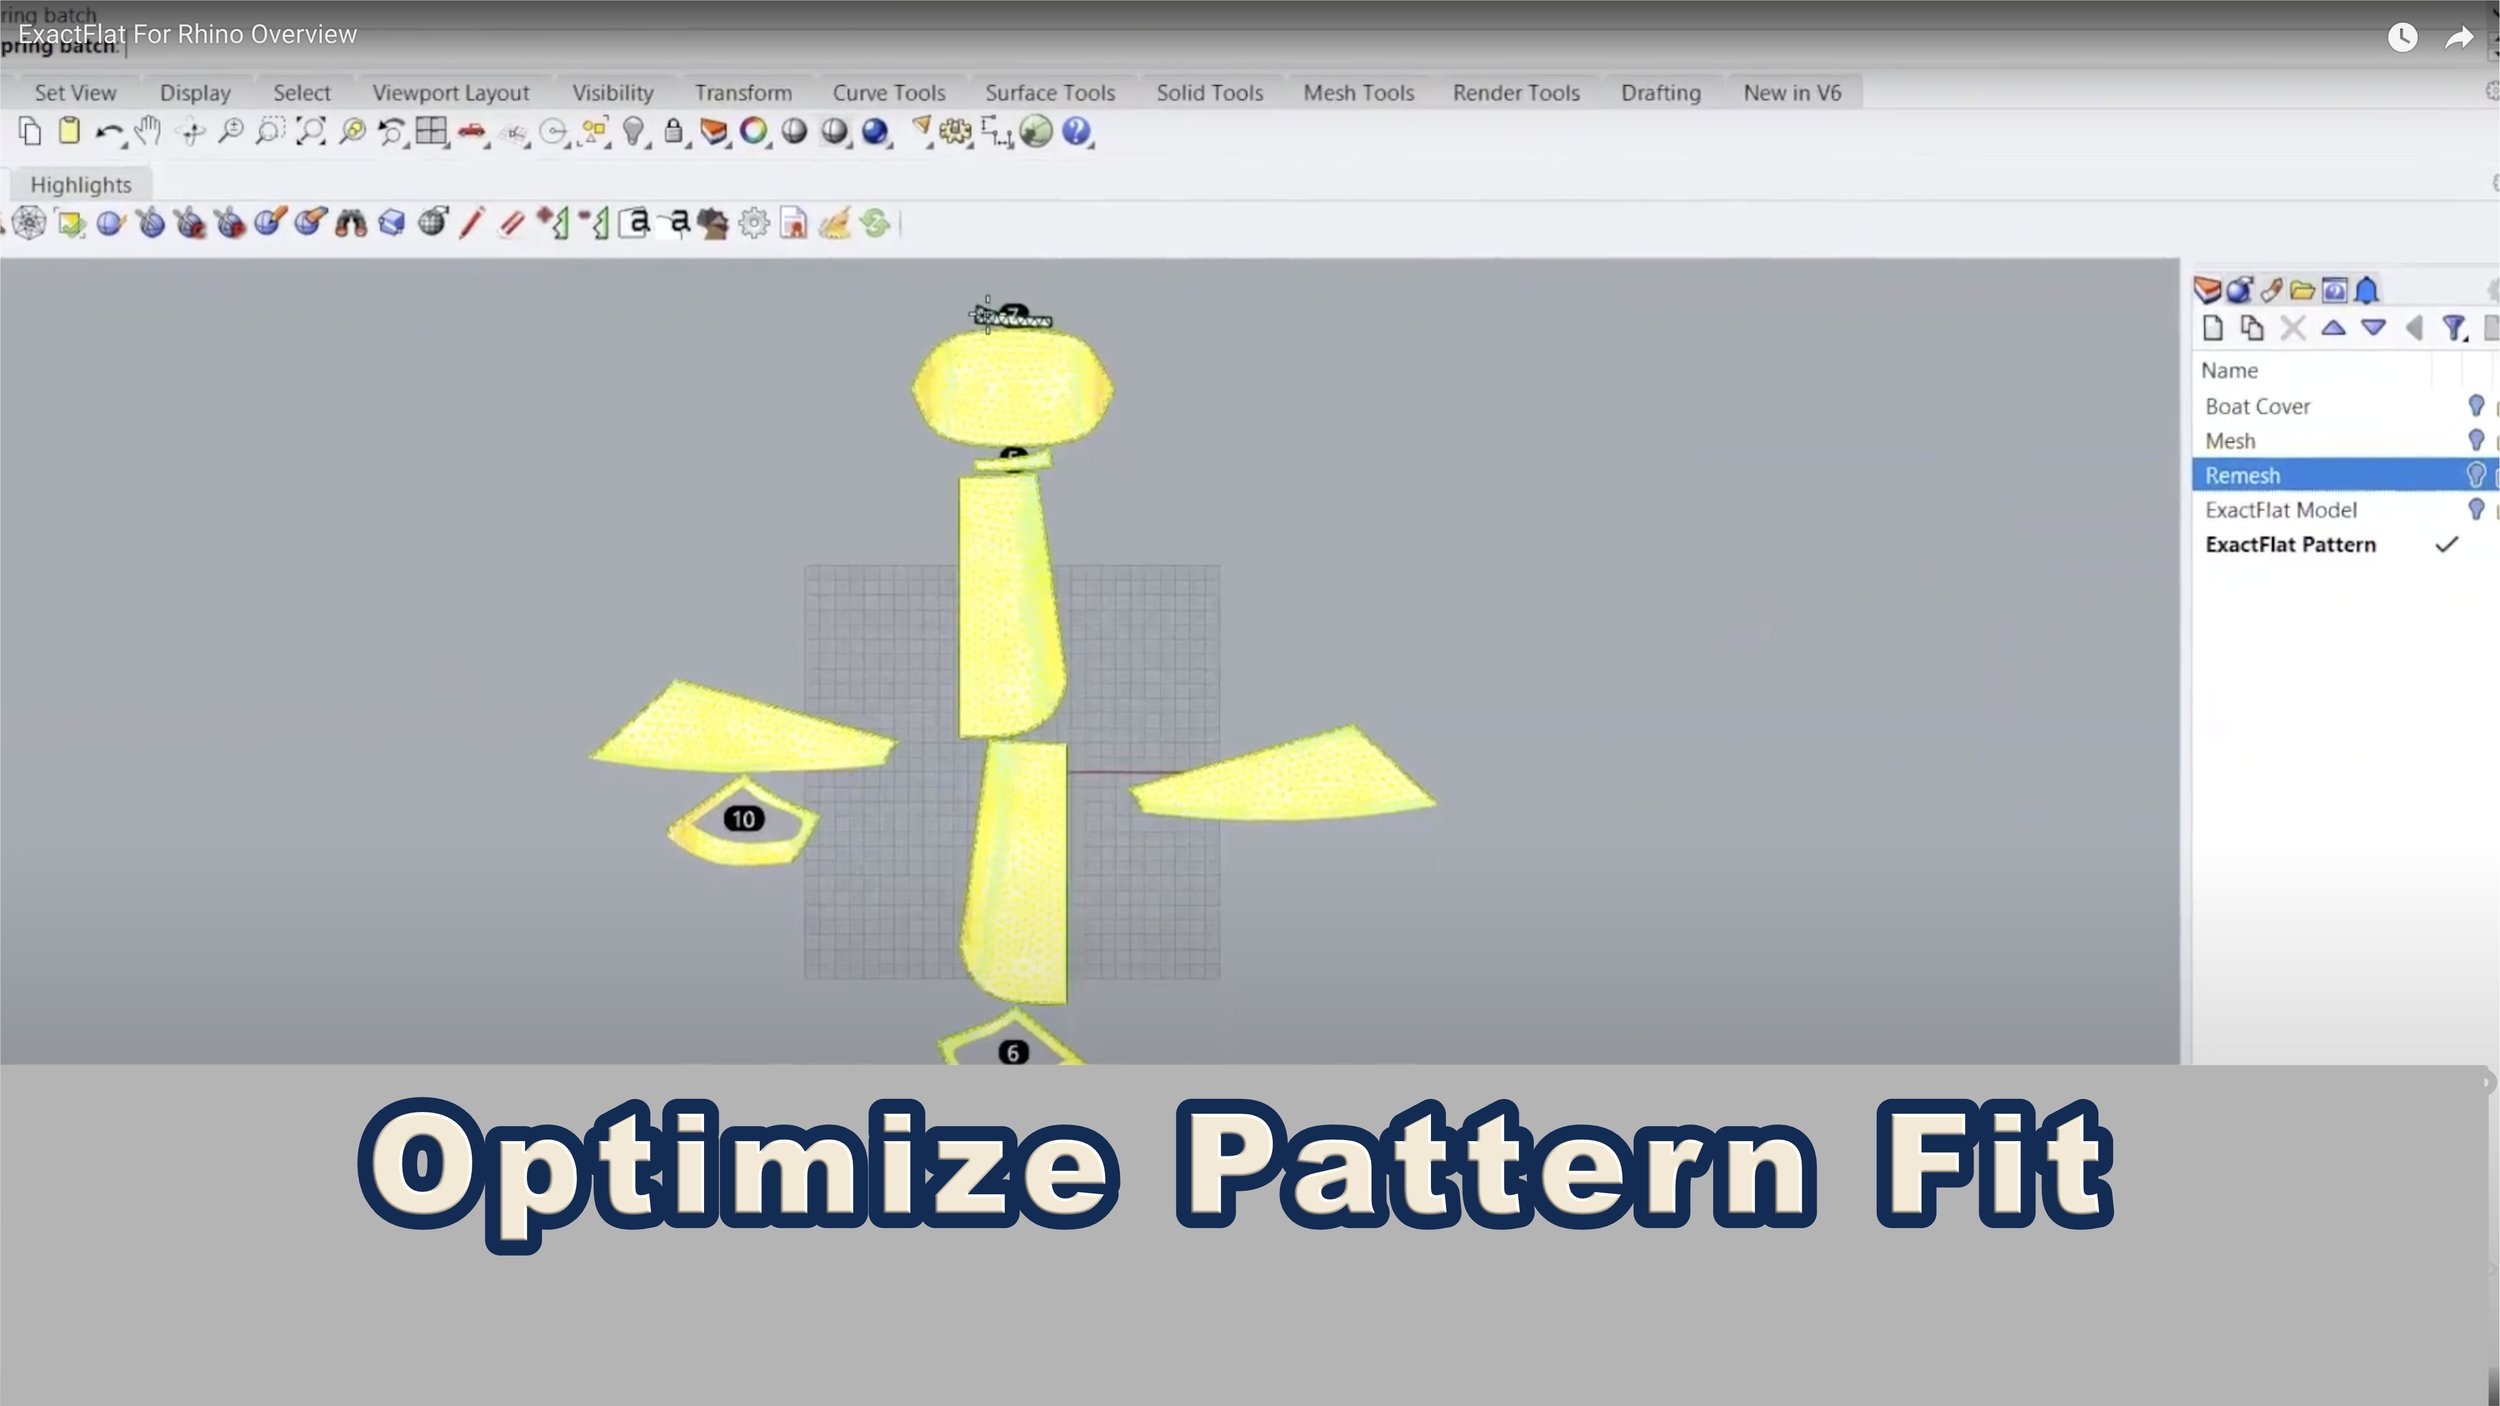 ExactFlat software optimizes pattern fit